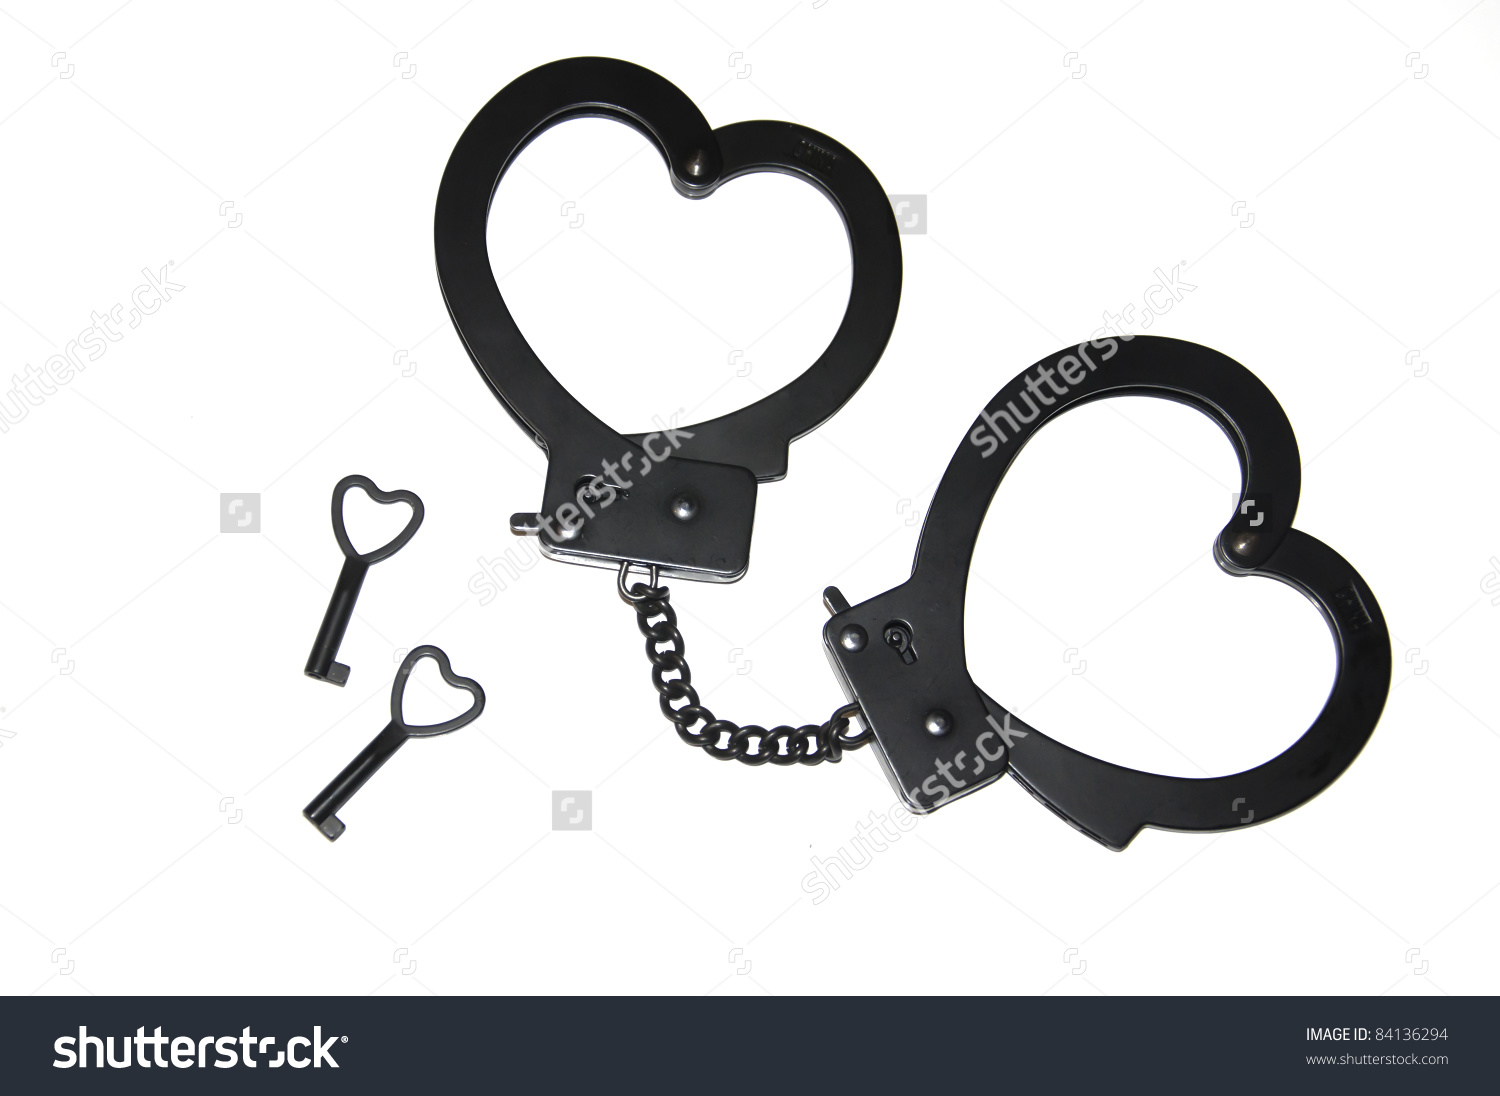 Handcuffs and key clip. Handcuff clipart heart